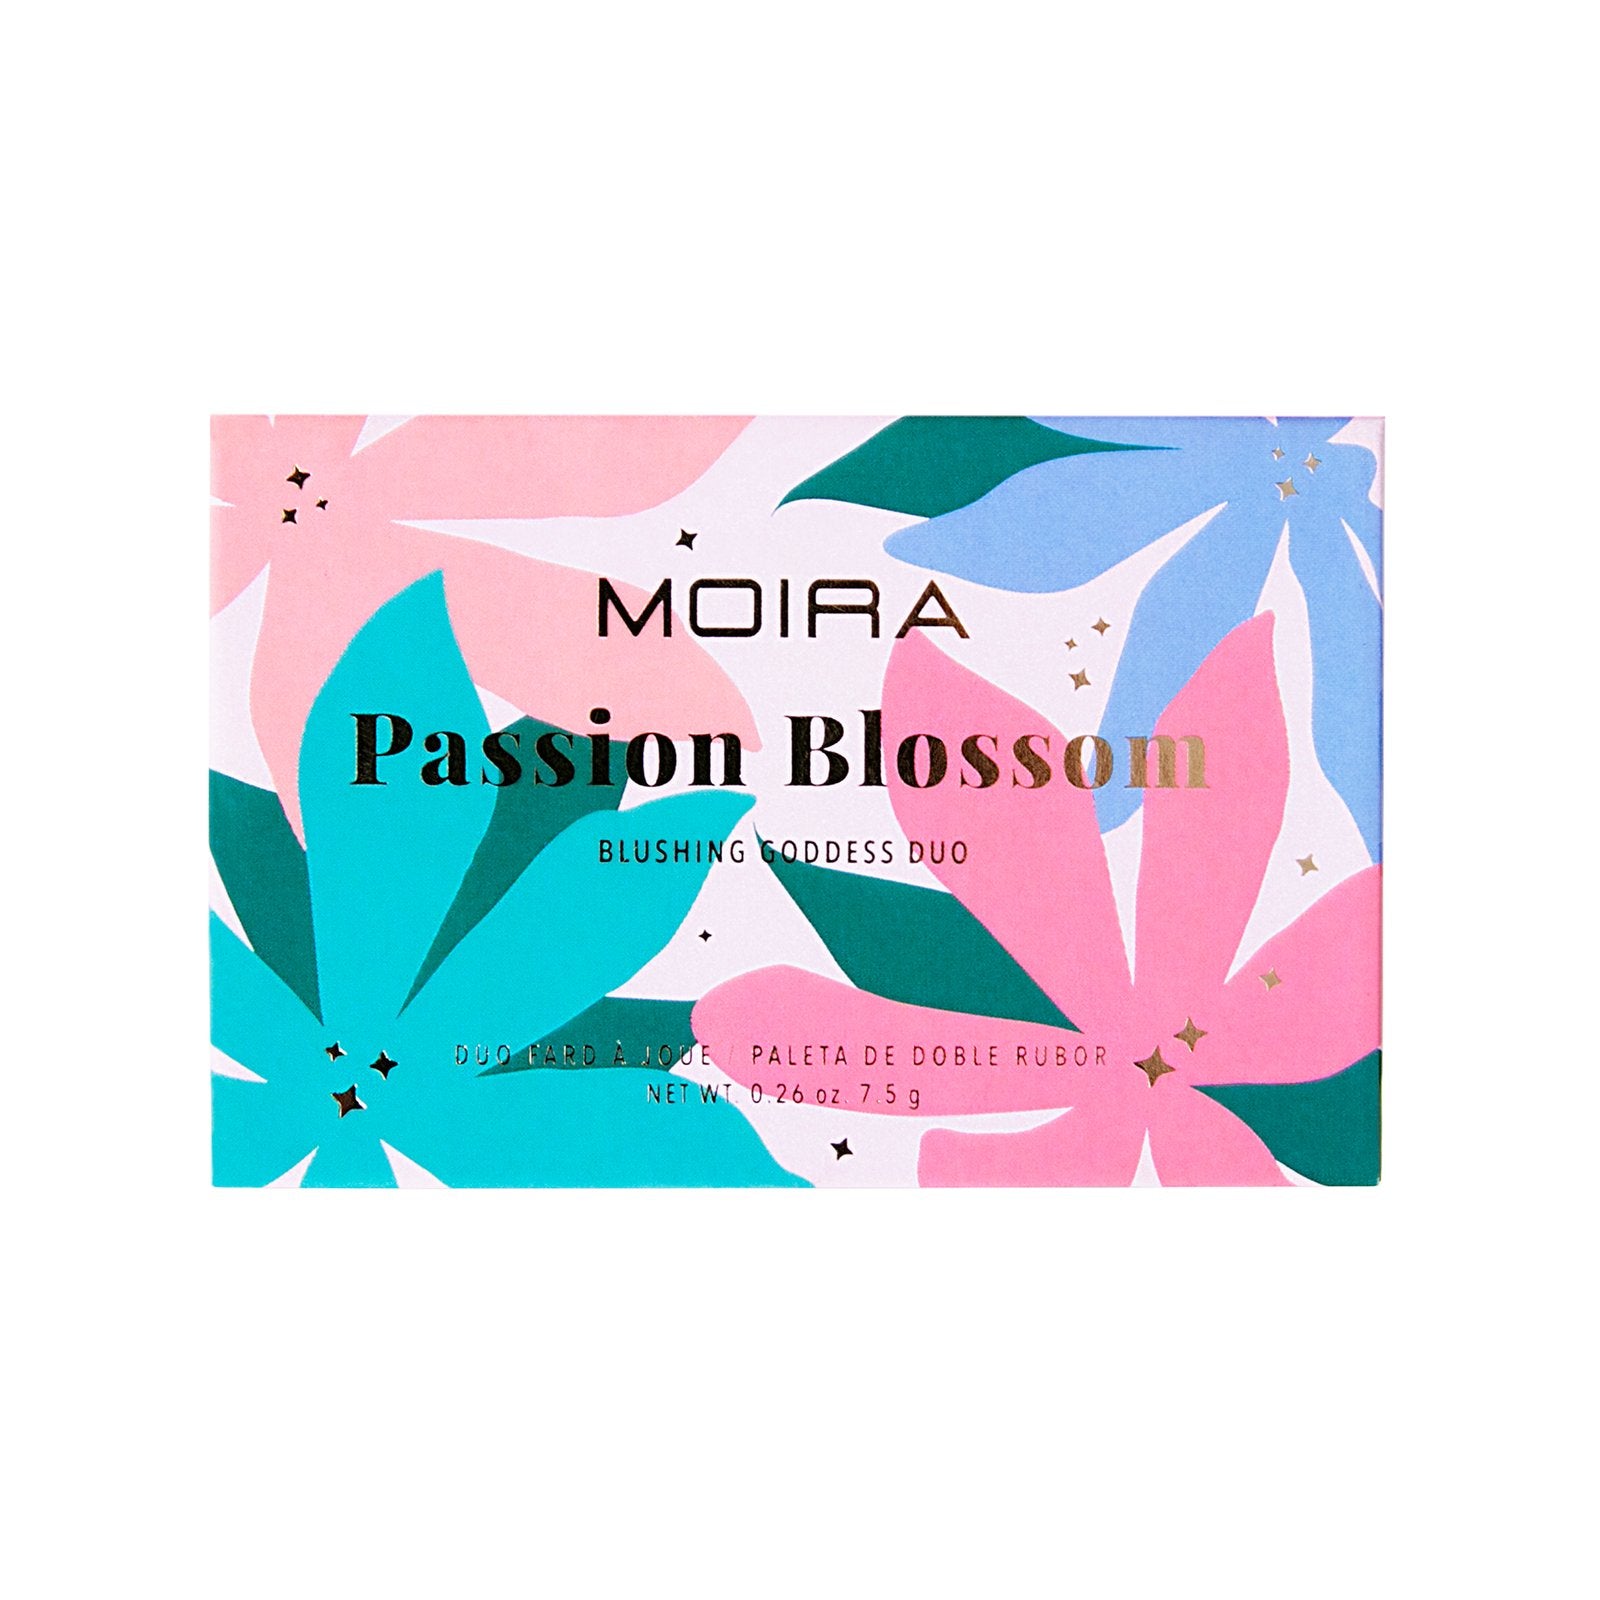 Moira Beauty - Passion Blossom Dual Blush Palette